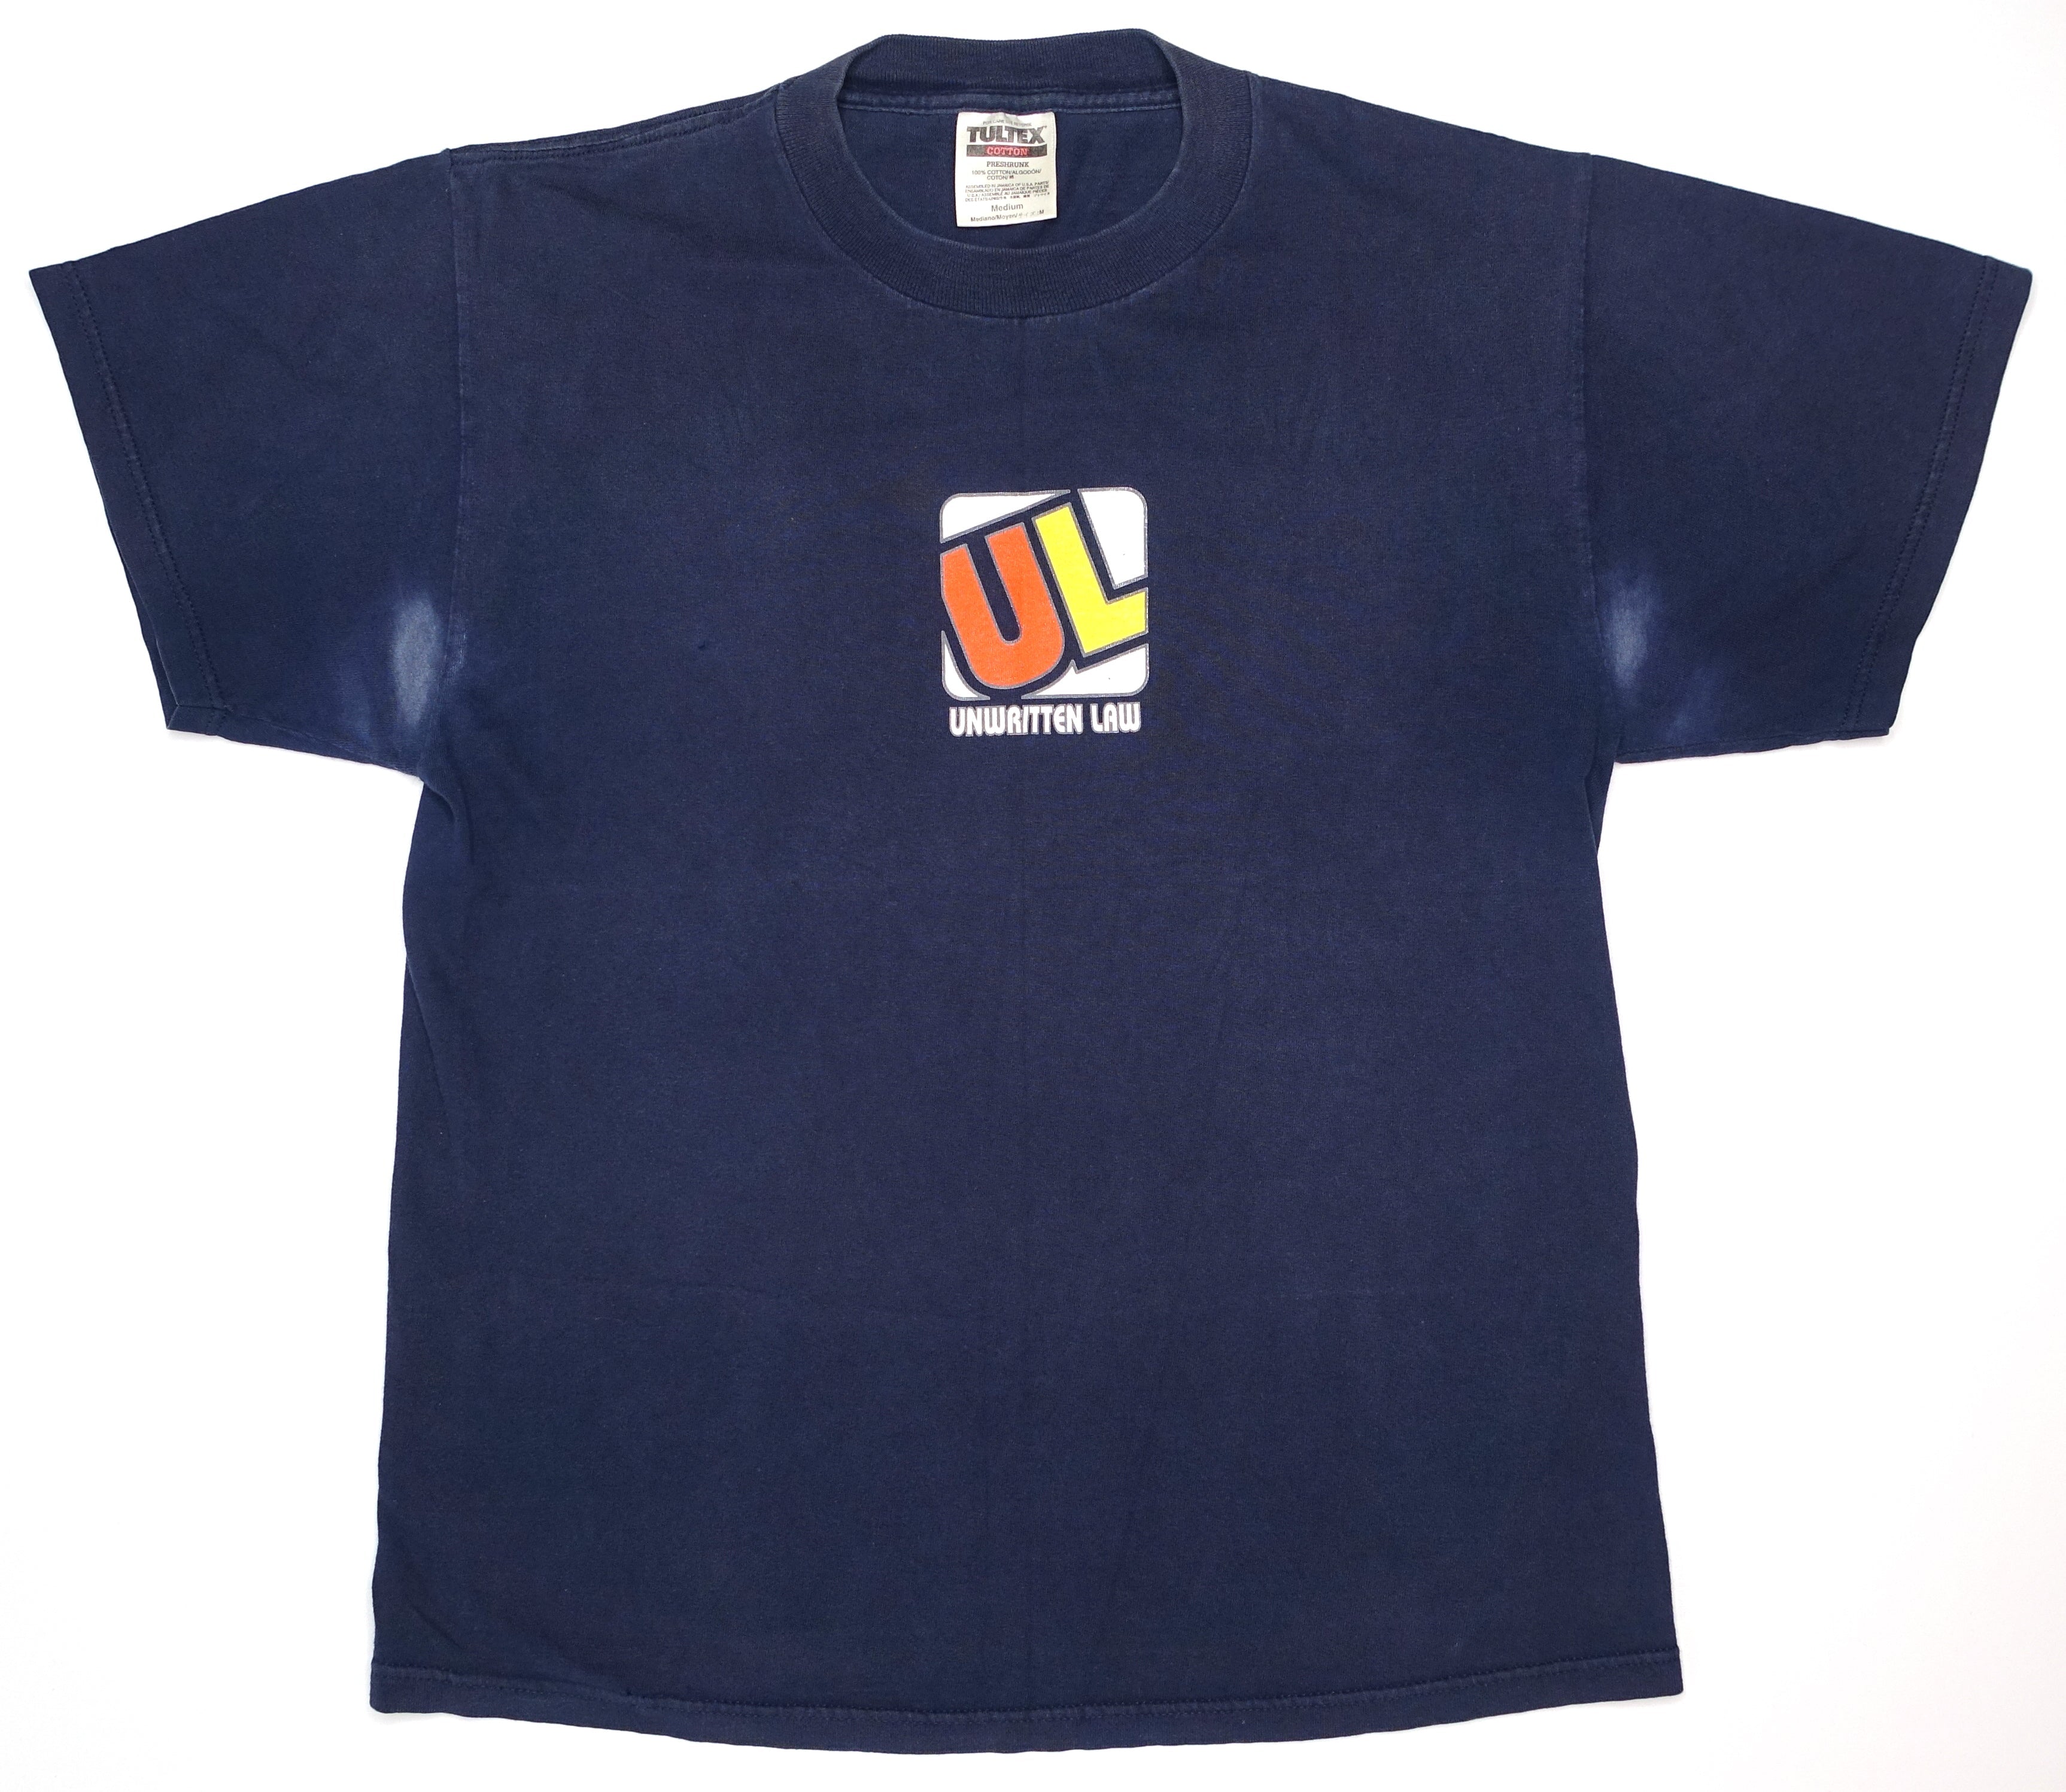 Unwritten Law – UL 1999 Tour Shirt Size Medium